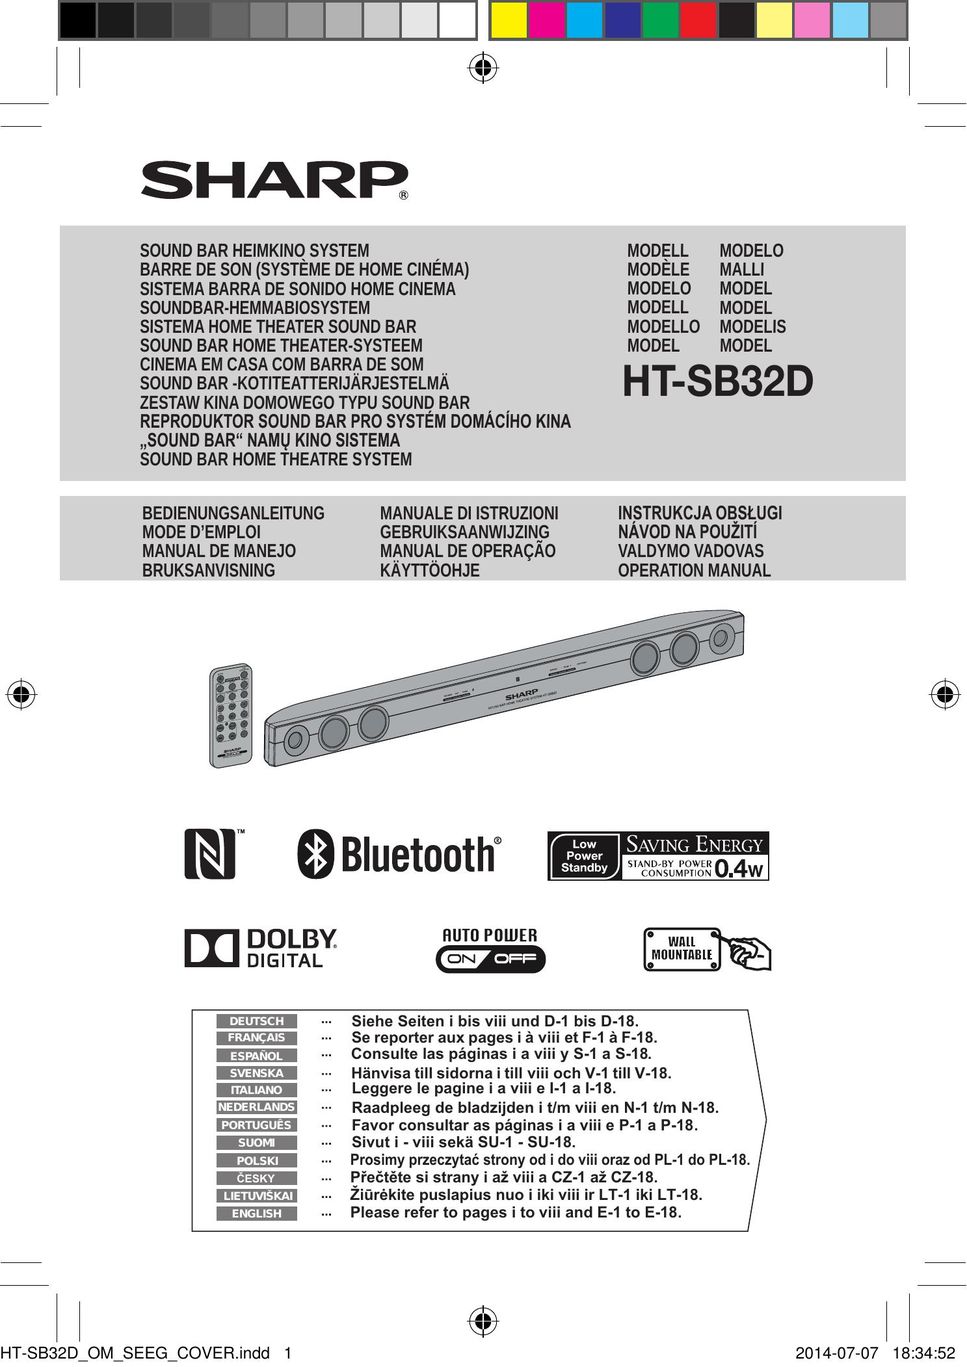 Sharp HT-SB32D TV DVD Combo User Manual